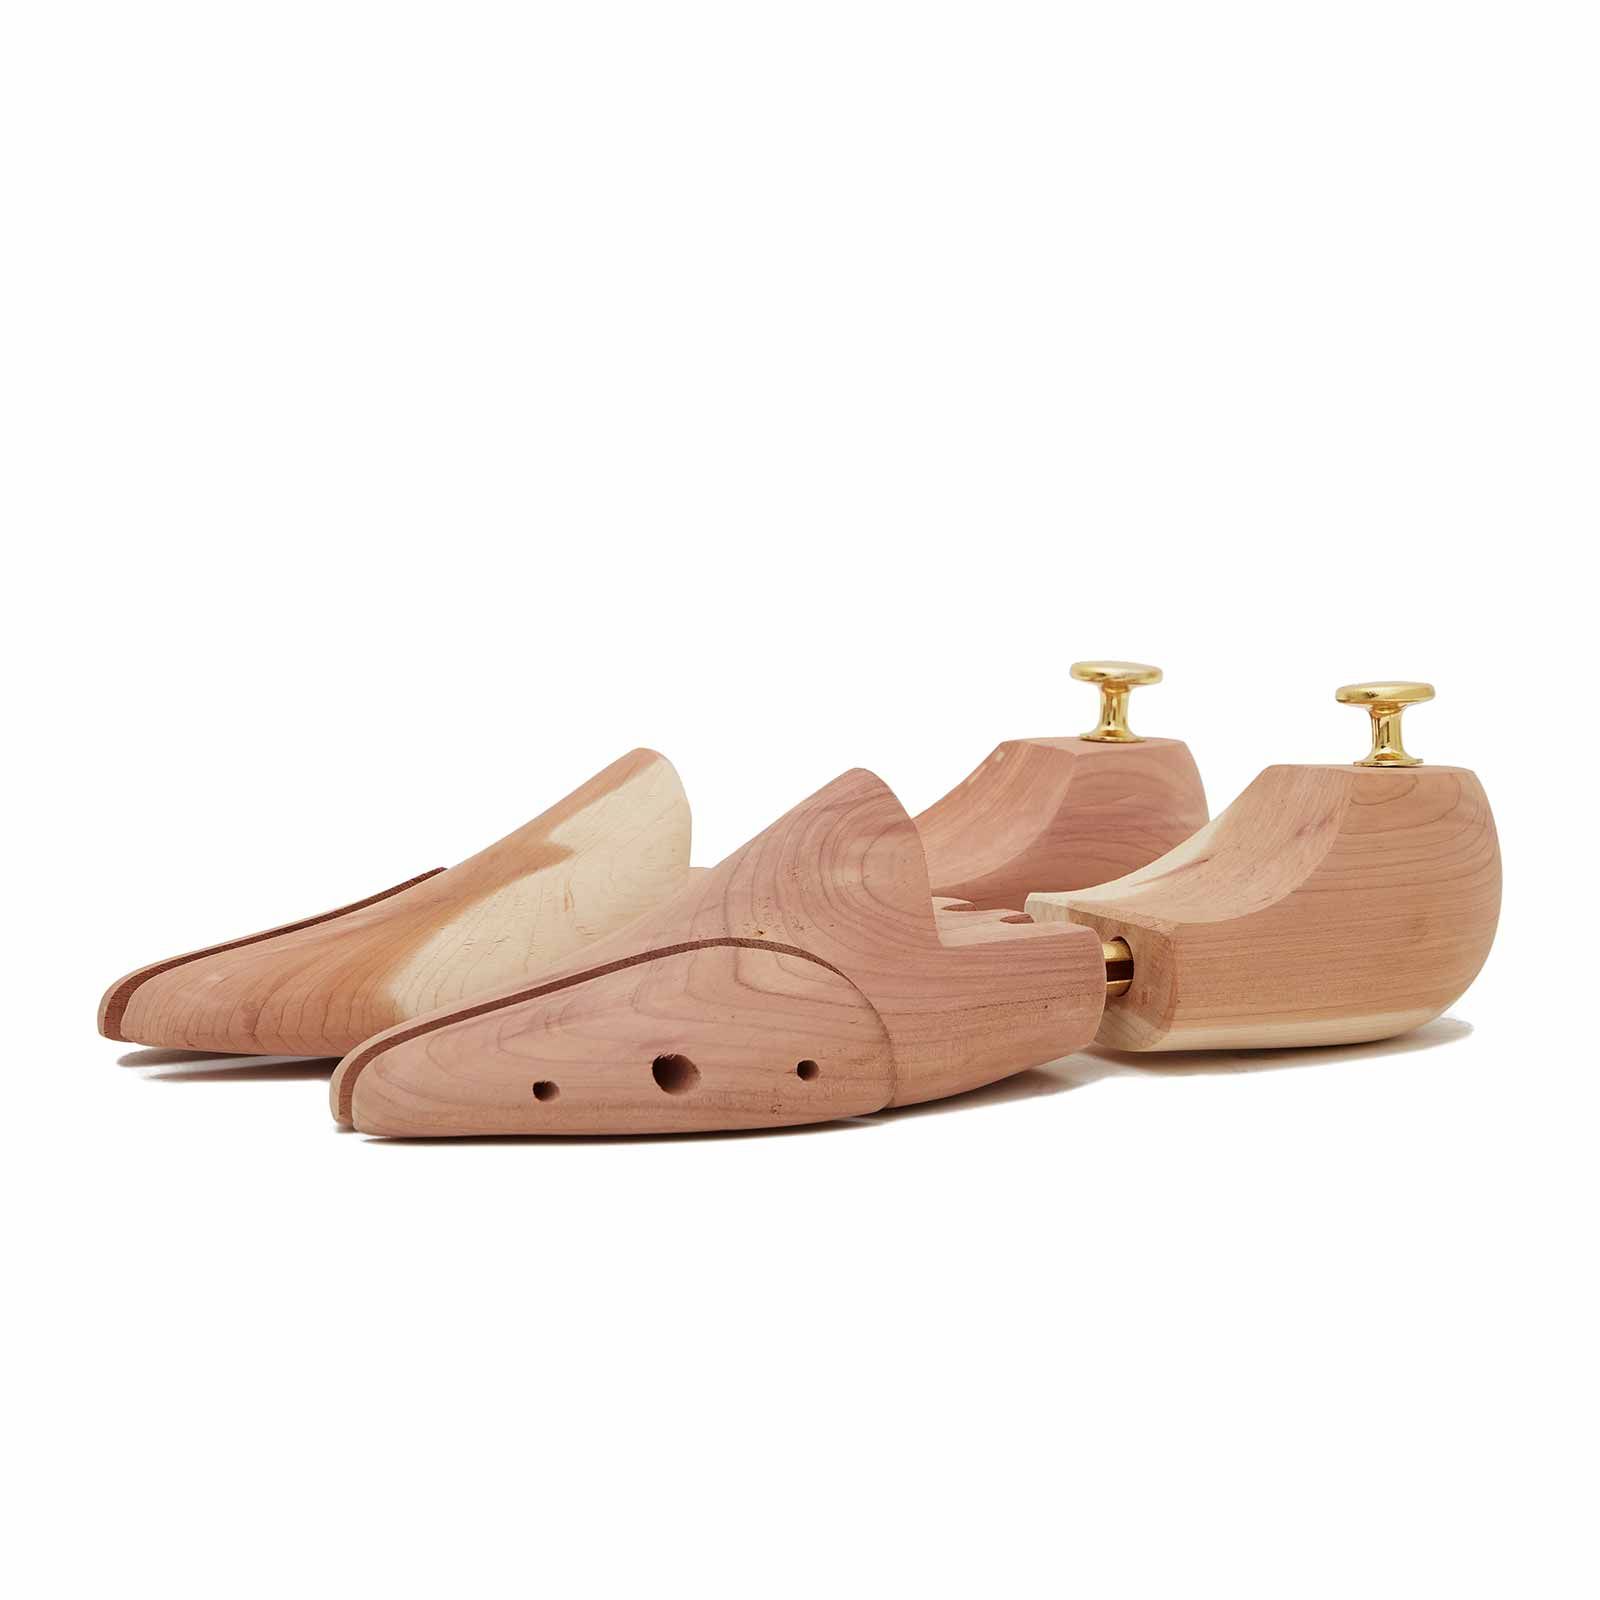 Schlesinger Hormas para botas de hombre de madera de cedro noble para un cuidado óptimo de botas y botas Modelo Graf Talla 39-48. 